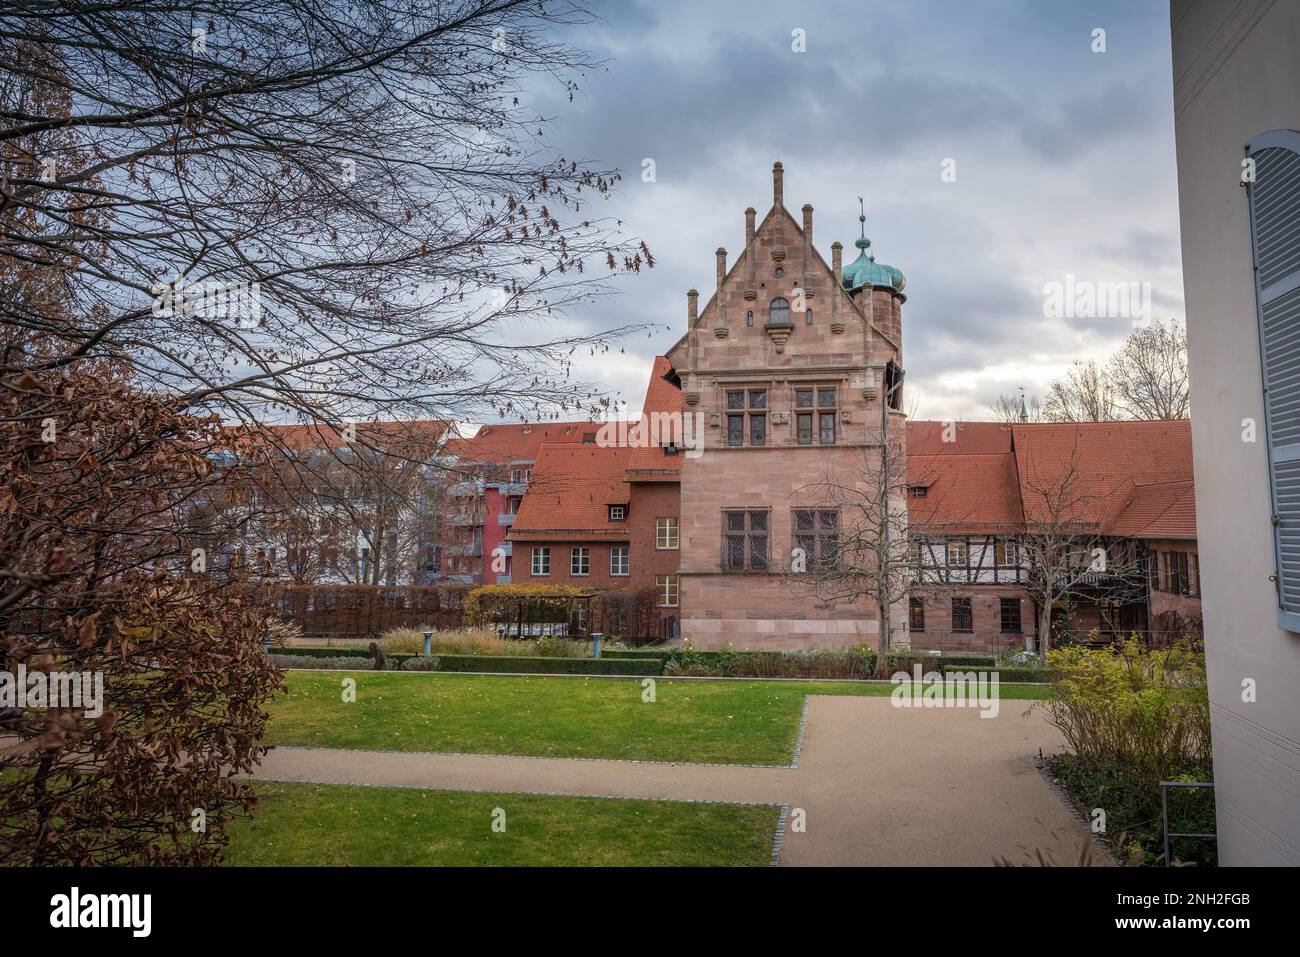 Museum Tucher Mansion and Hirsvogel Hall - Tucherschloss - Nuremberg, Bavaria, Germany Stock Photo